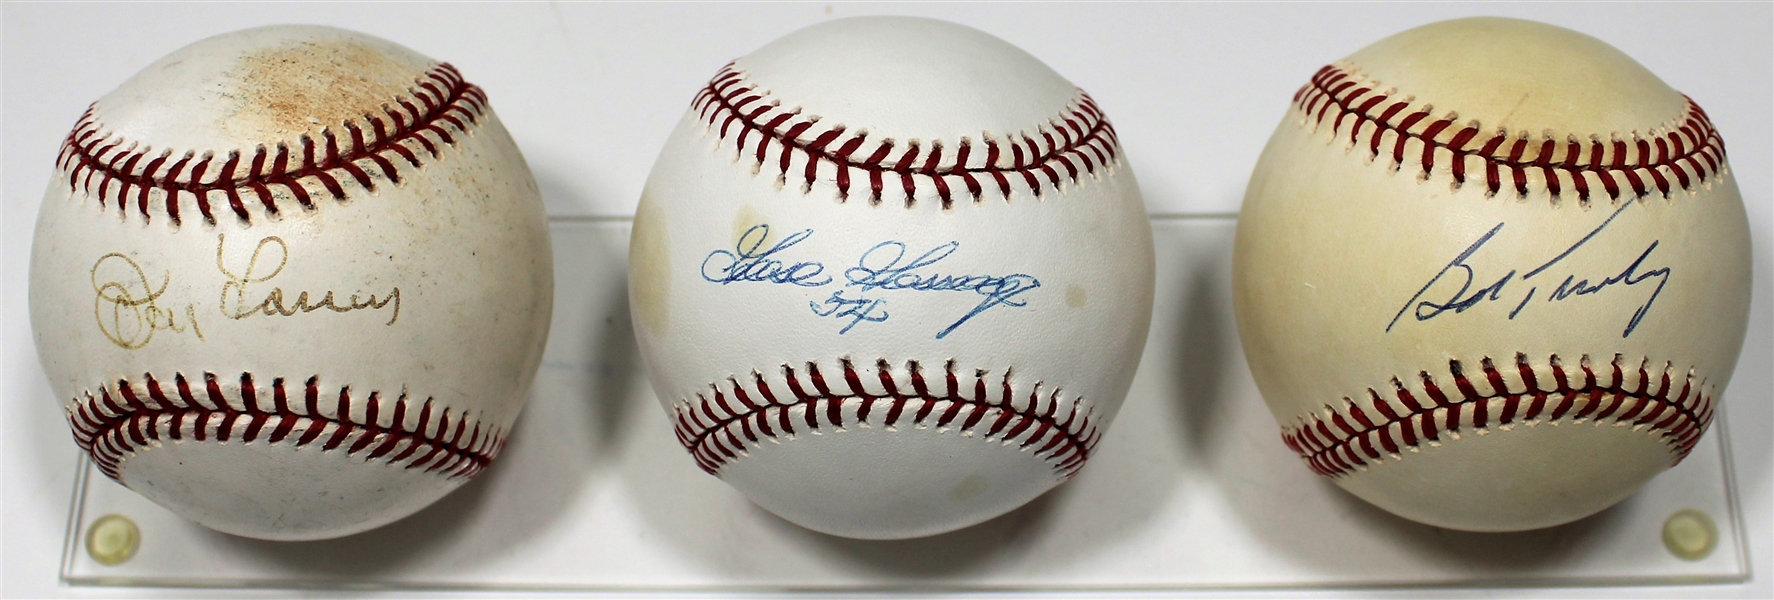 Don Larsen - Goose Gossage - Bob Turley Signed Baseballs - JSA